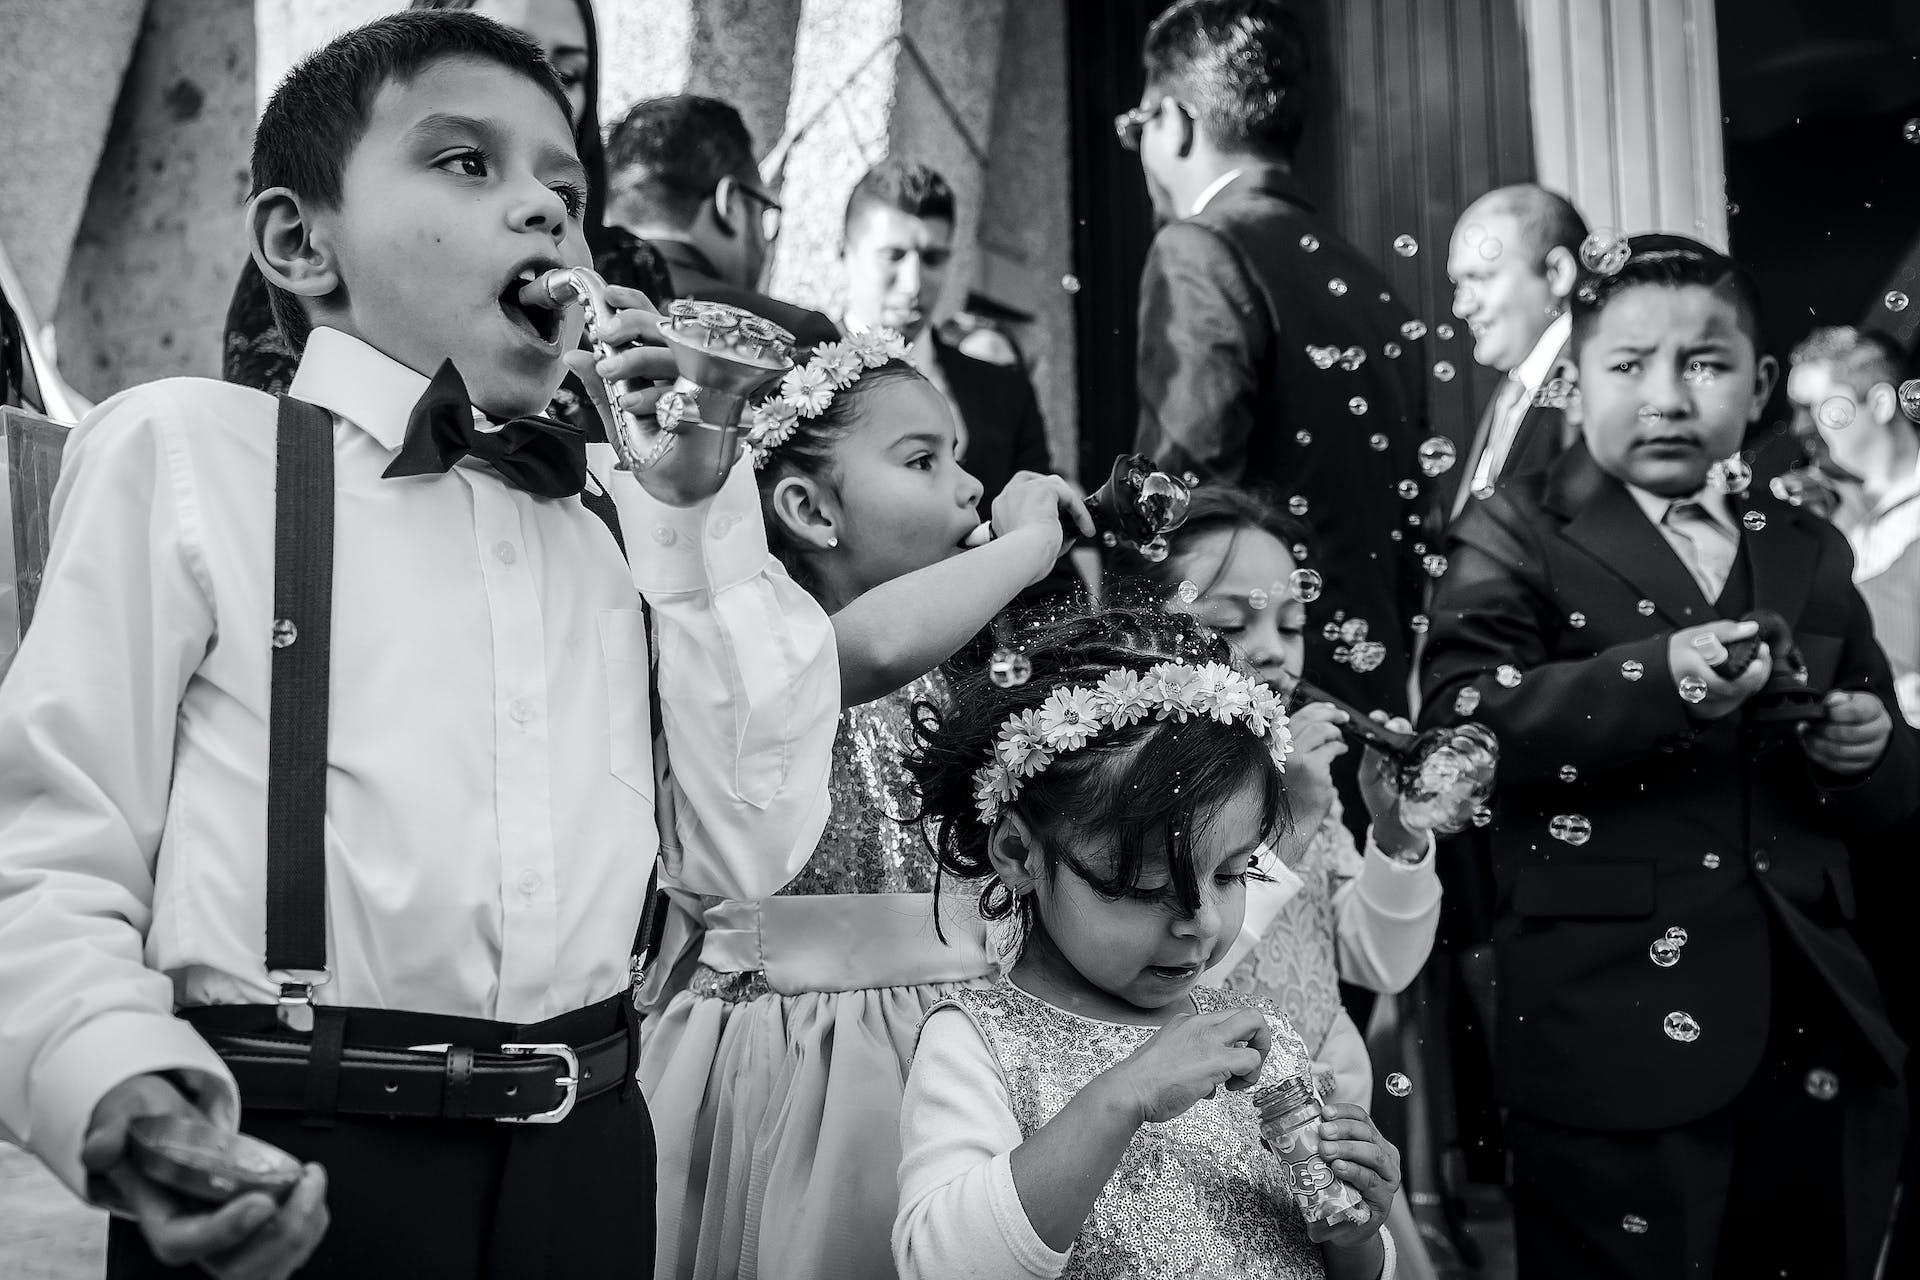 Children at a wedding | Source: Pexels